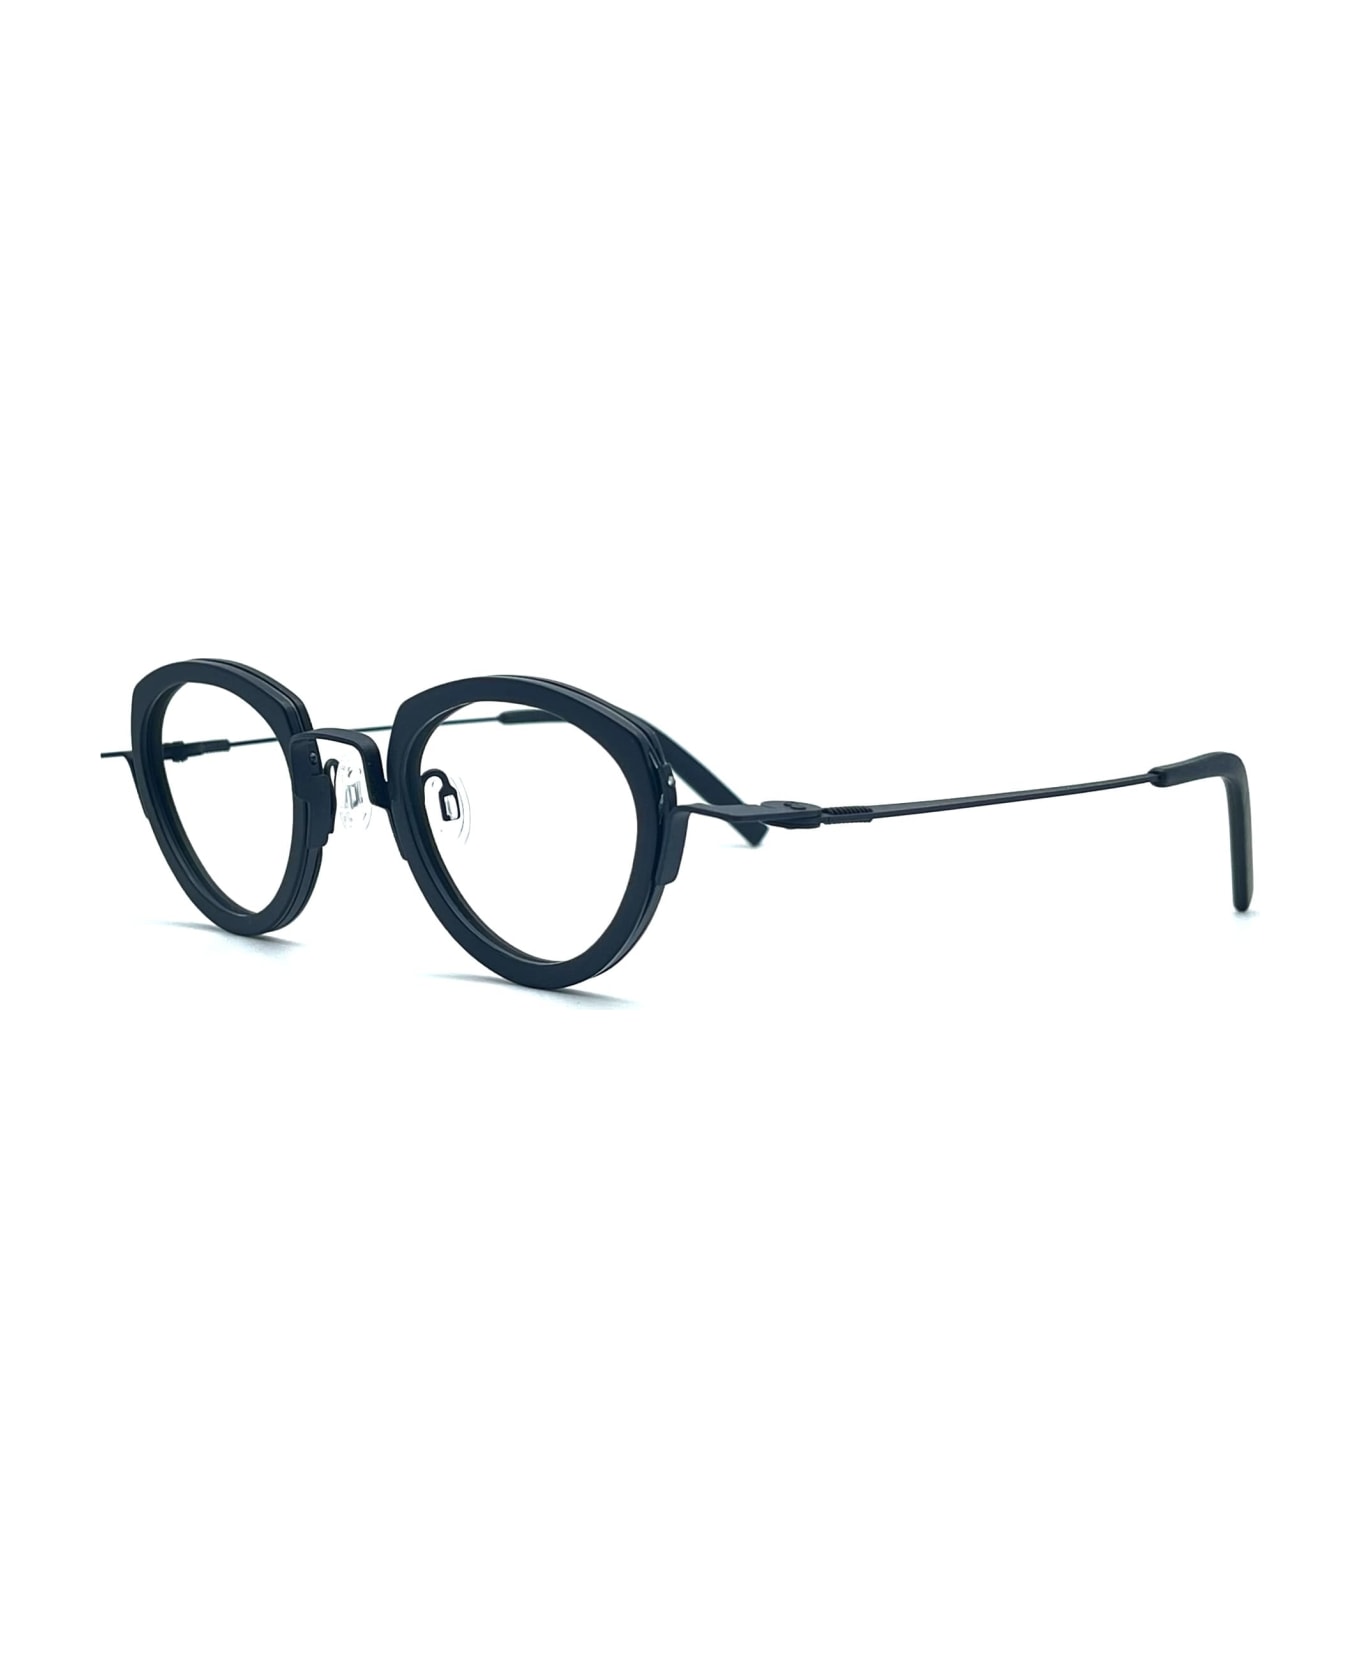 Theo Eyewear Spinach - 2 Glasses - black matte